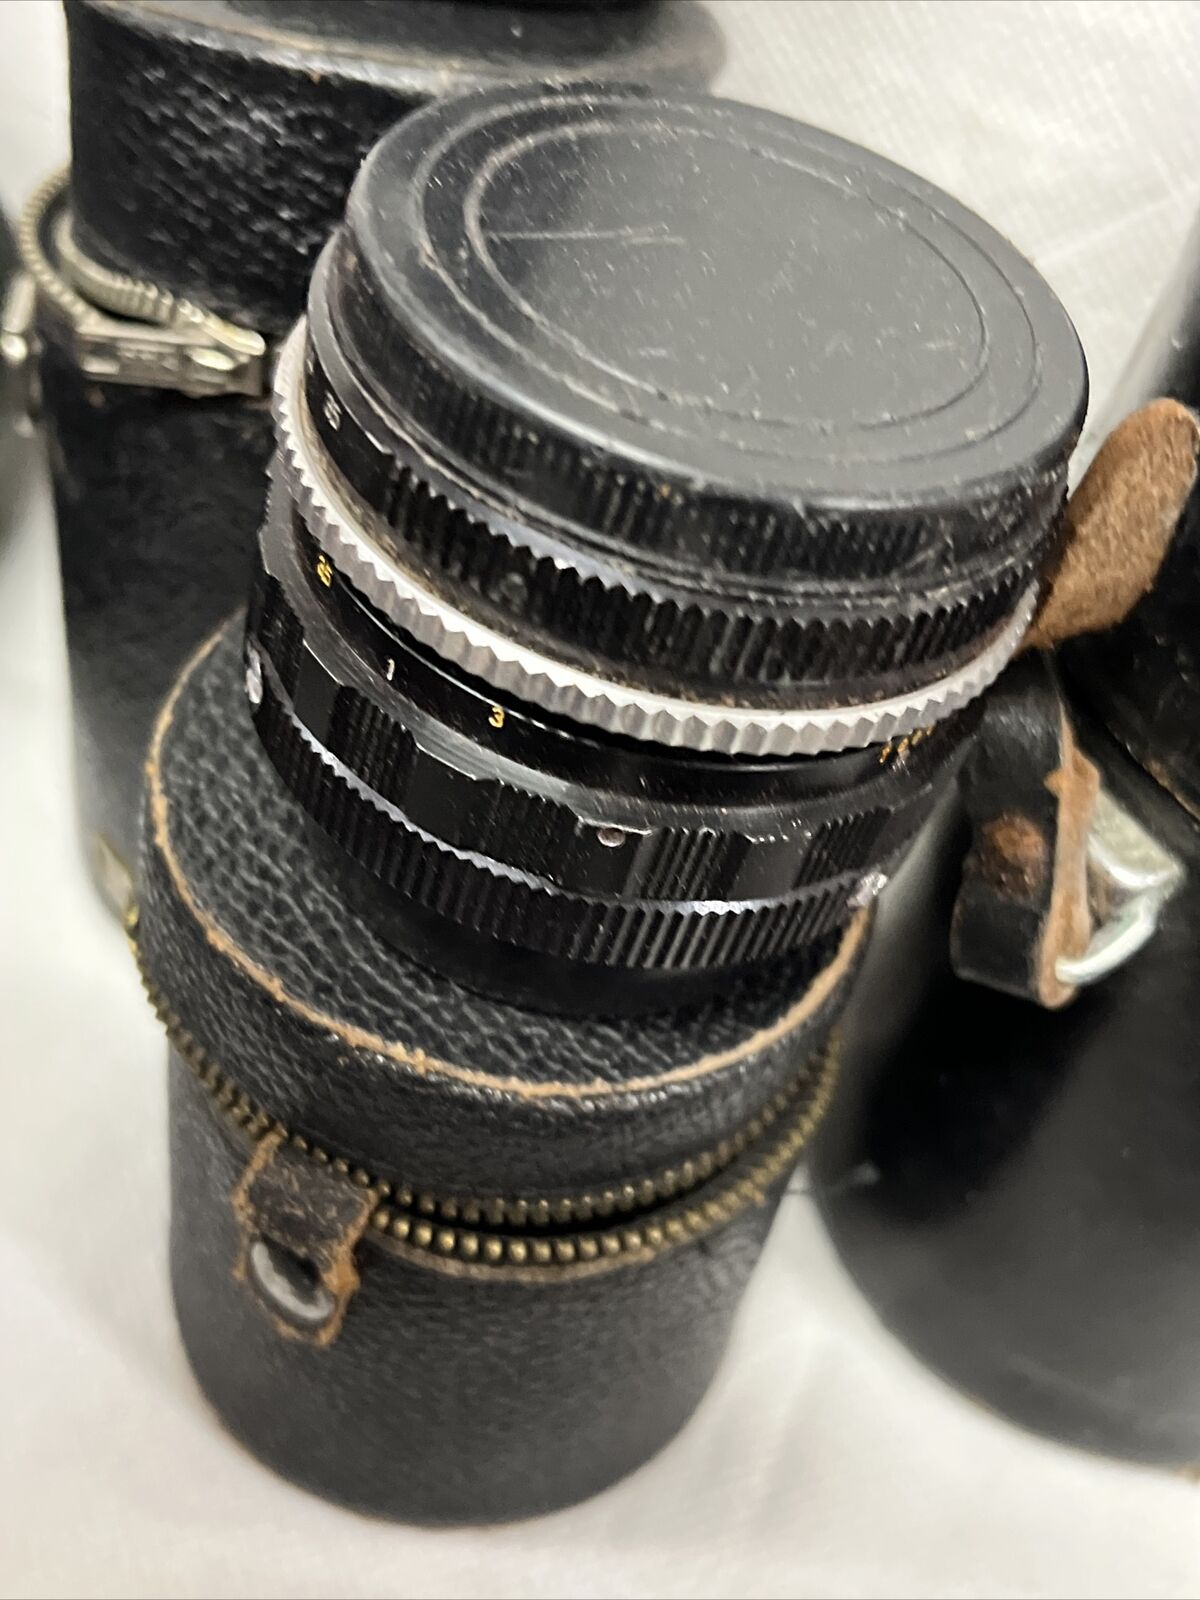 Vintage Camera zoom lenses